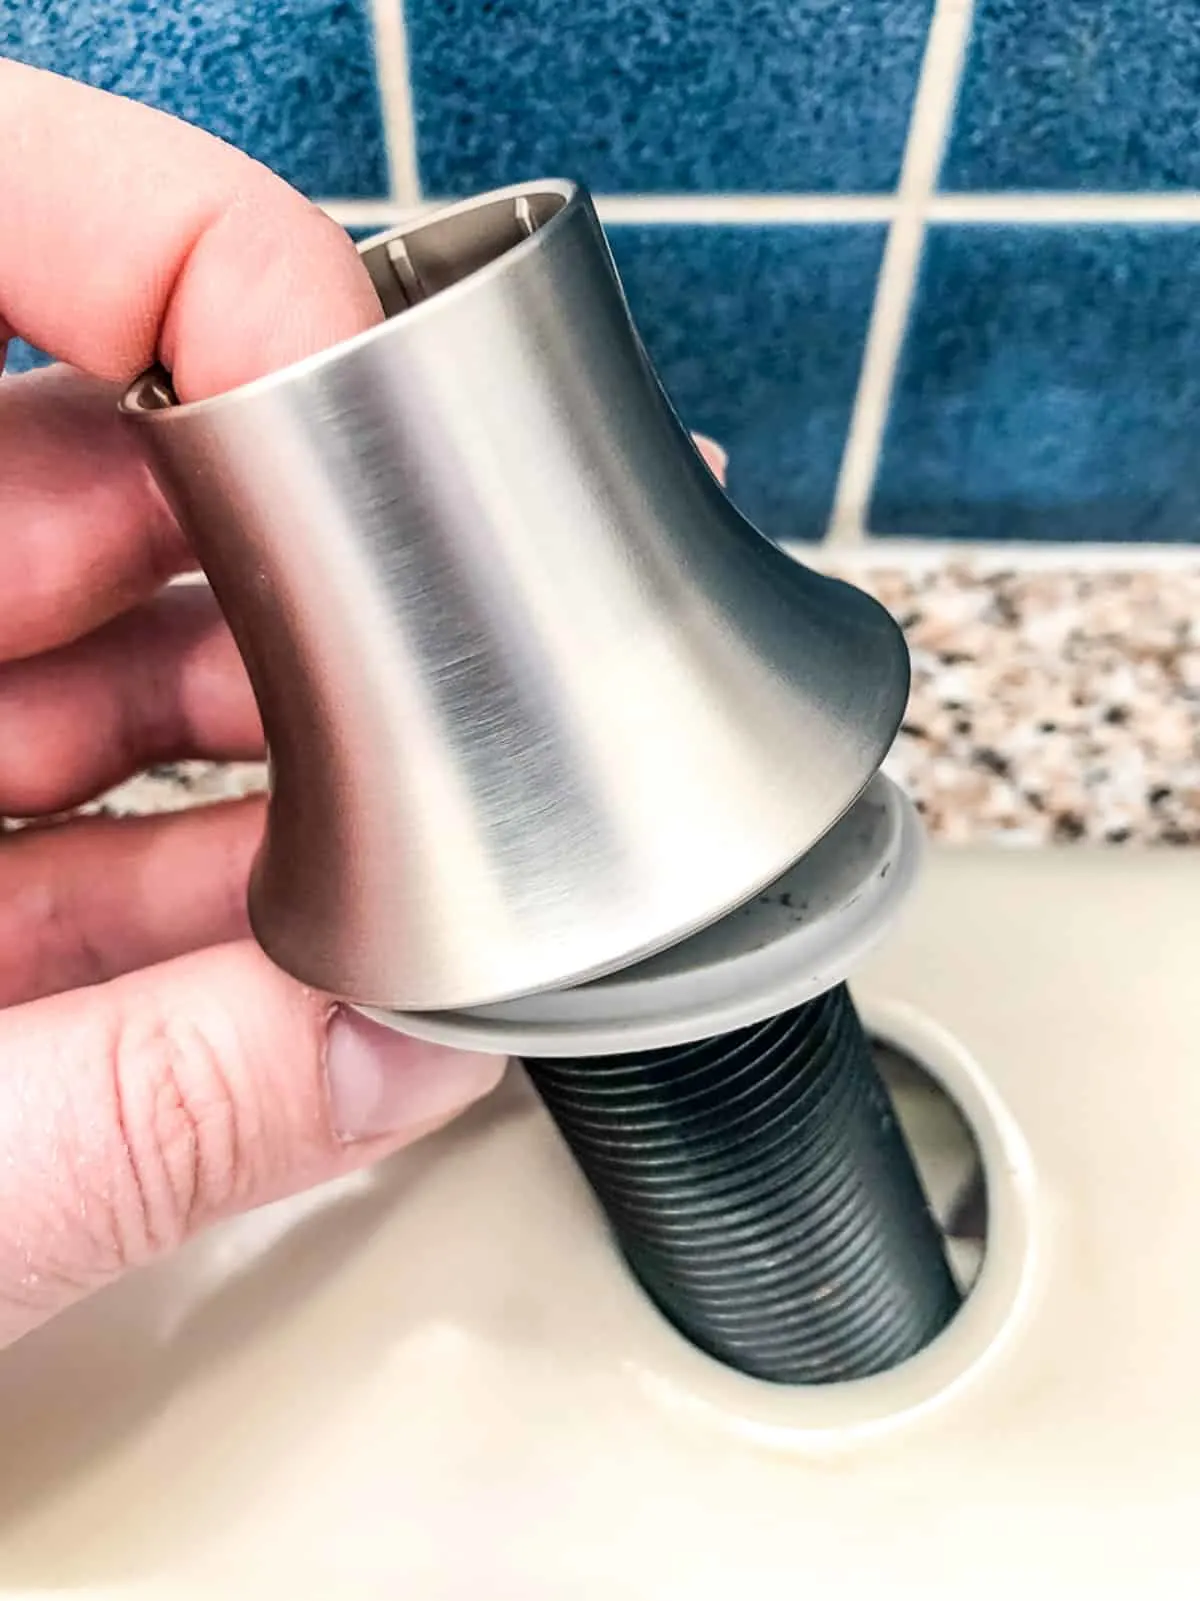 kitchen sink soap dispenser escutcheon and gasket over hole in sink